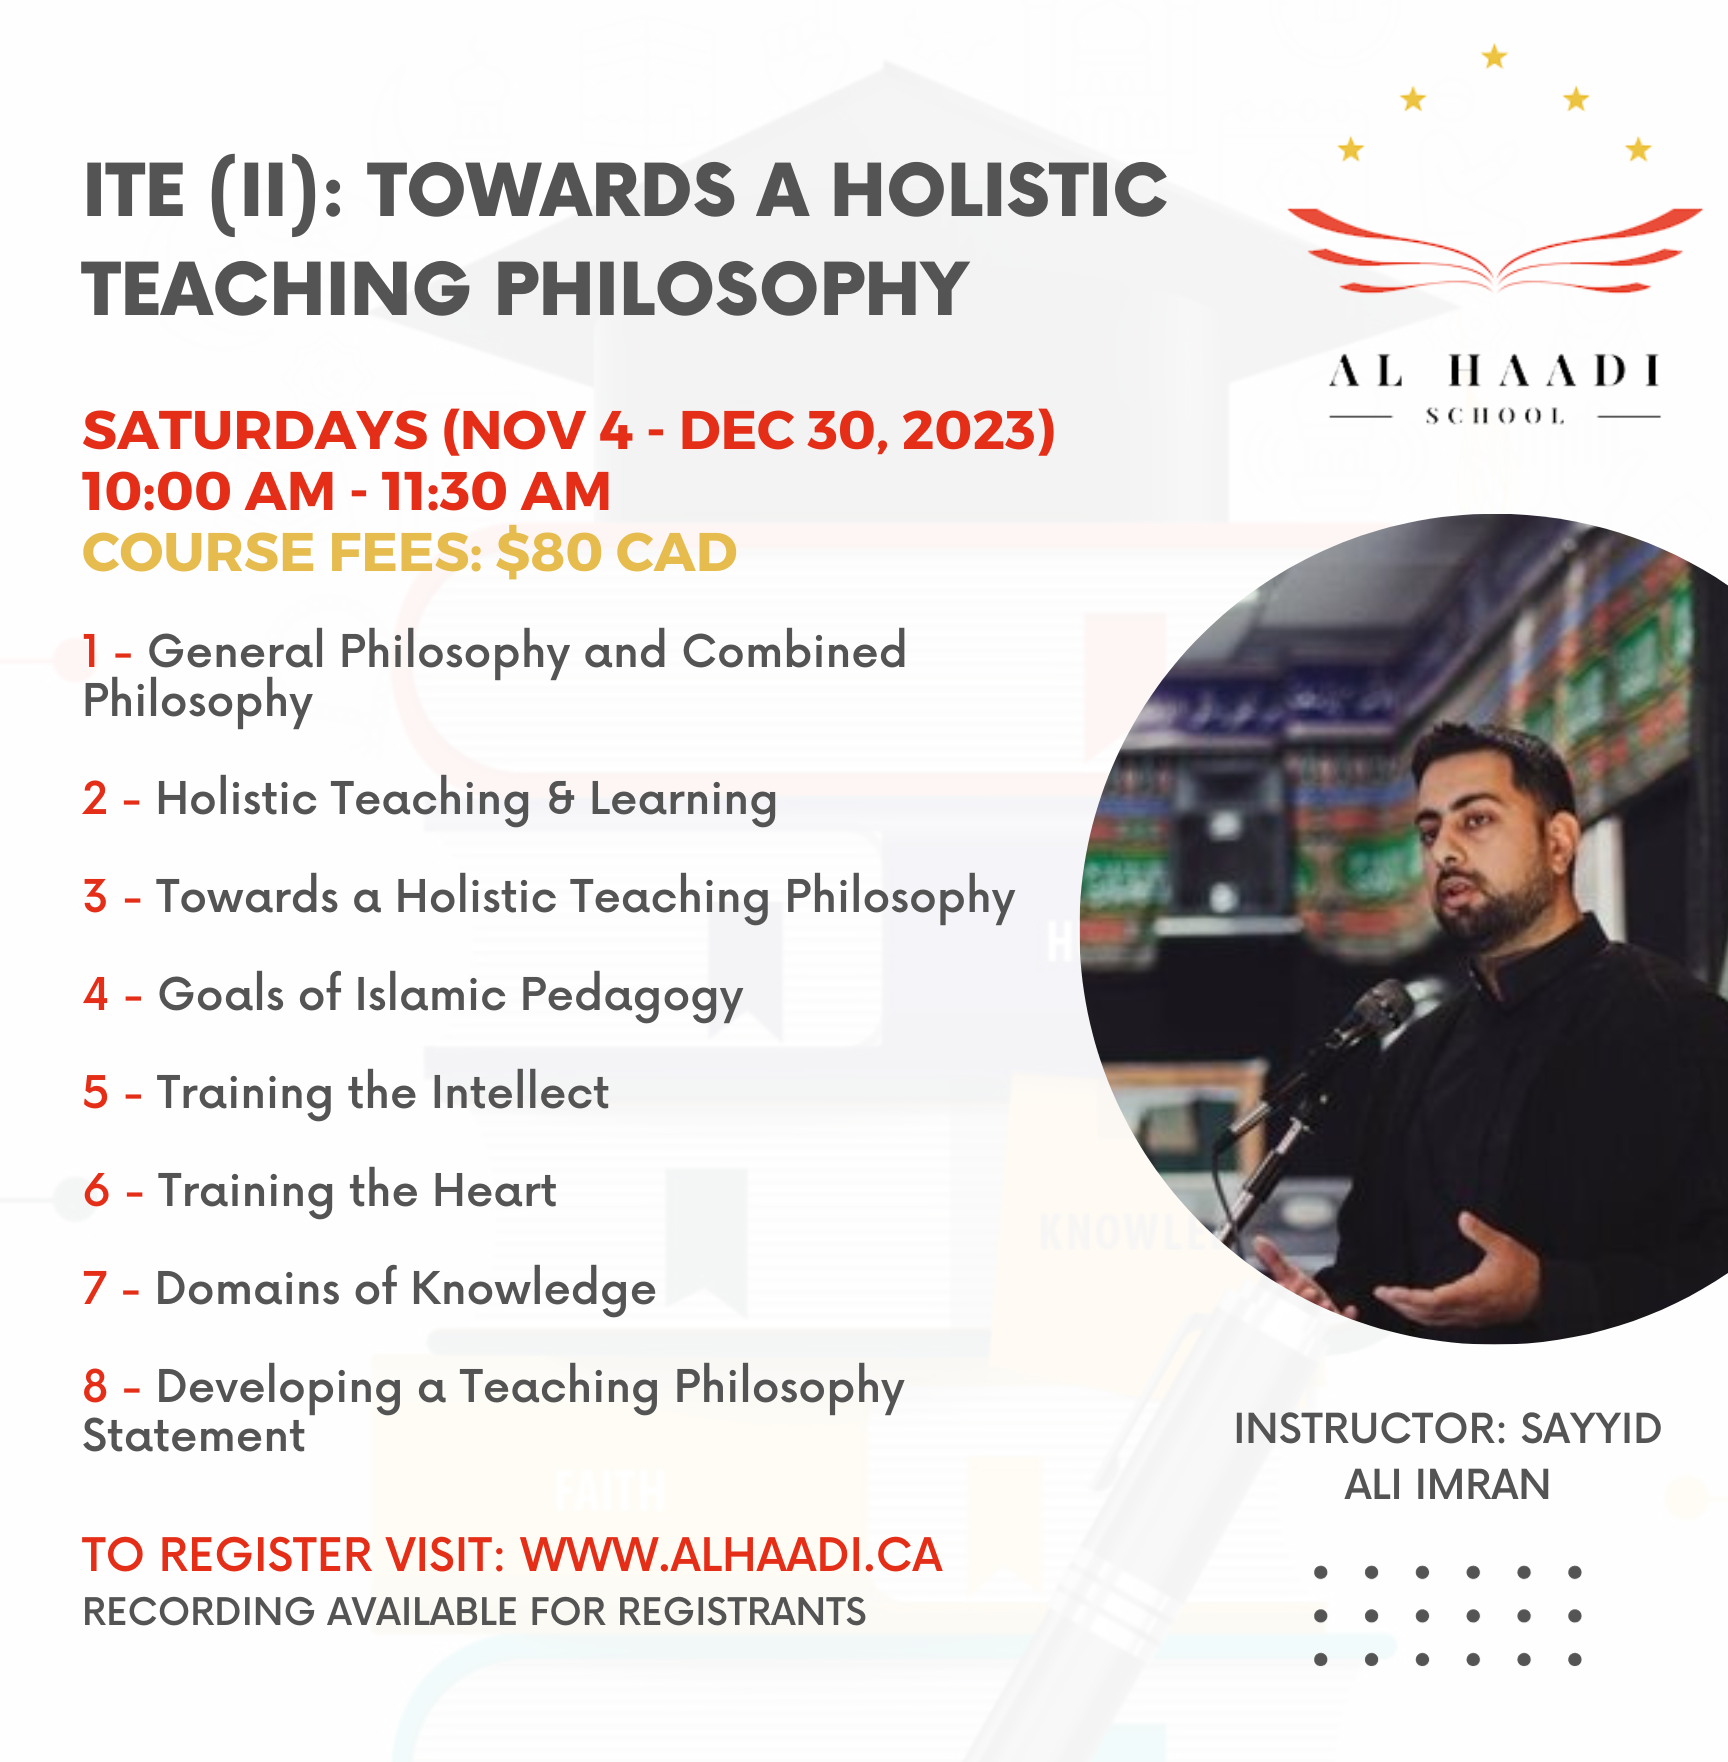 ITE (II): Towards a Holistic Teaching Philosophy